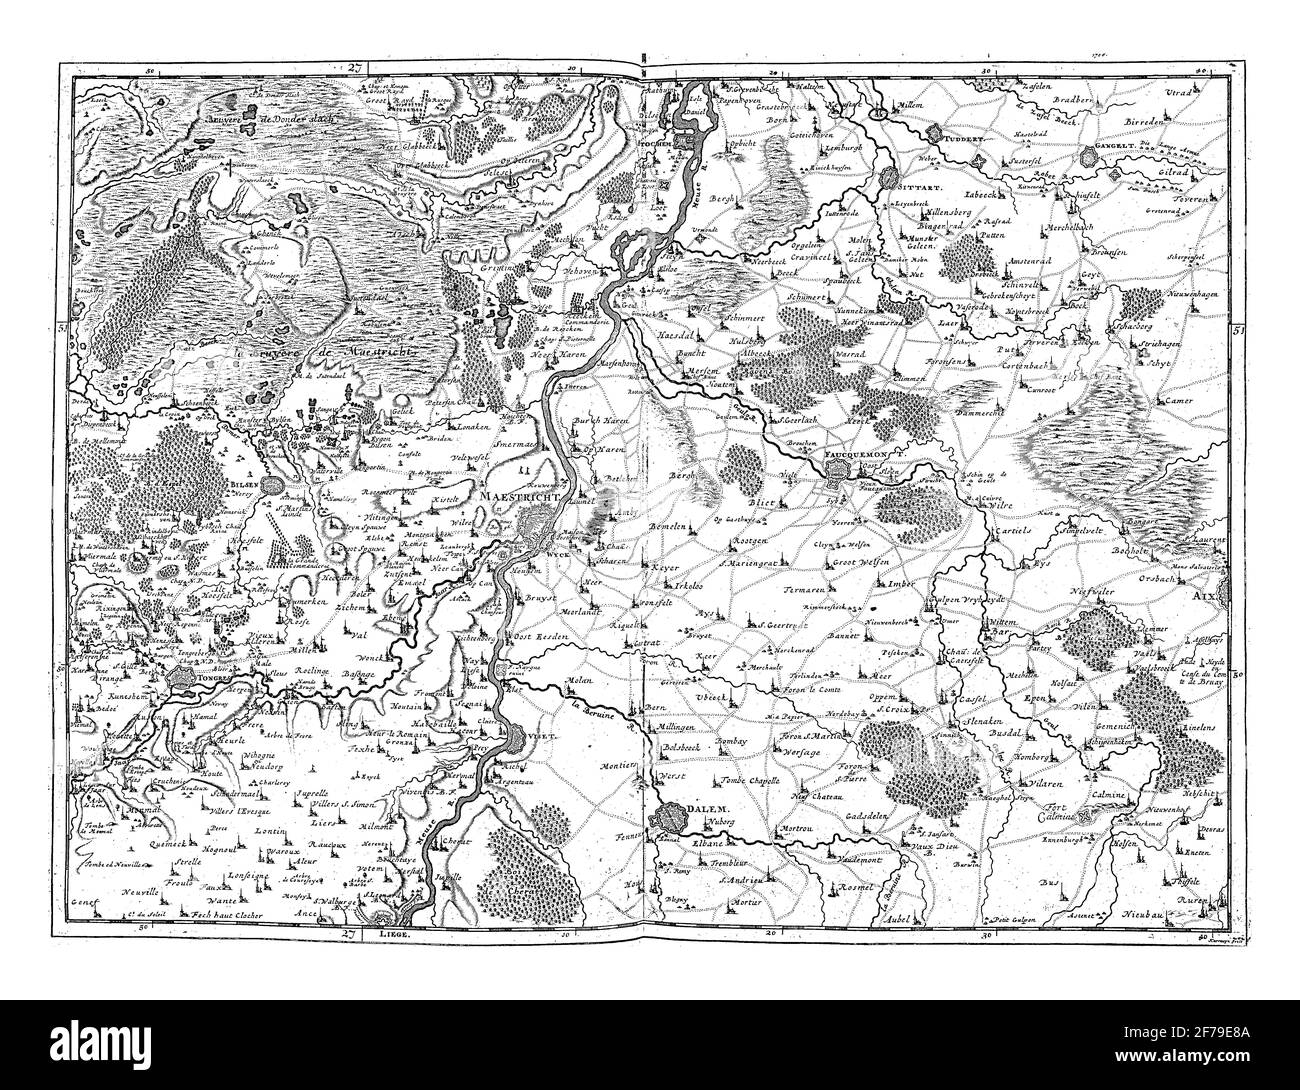 Map of Limburg, vintage engraving. Stock Photo